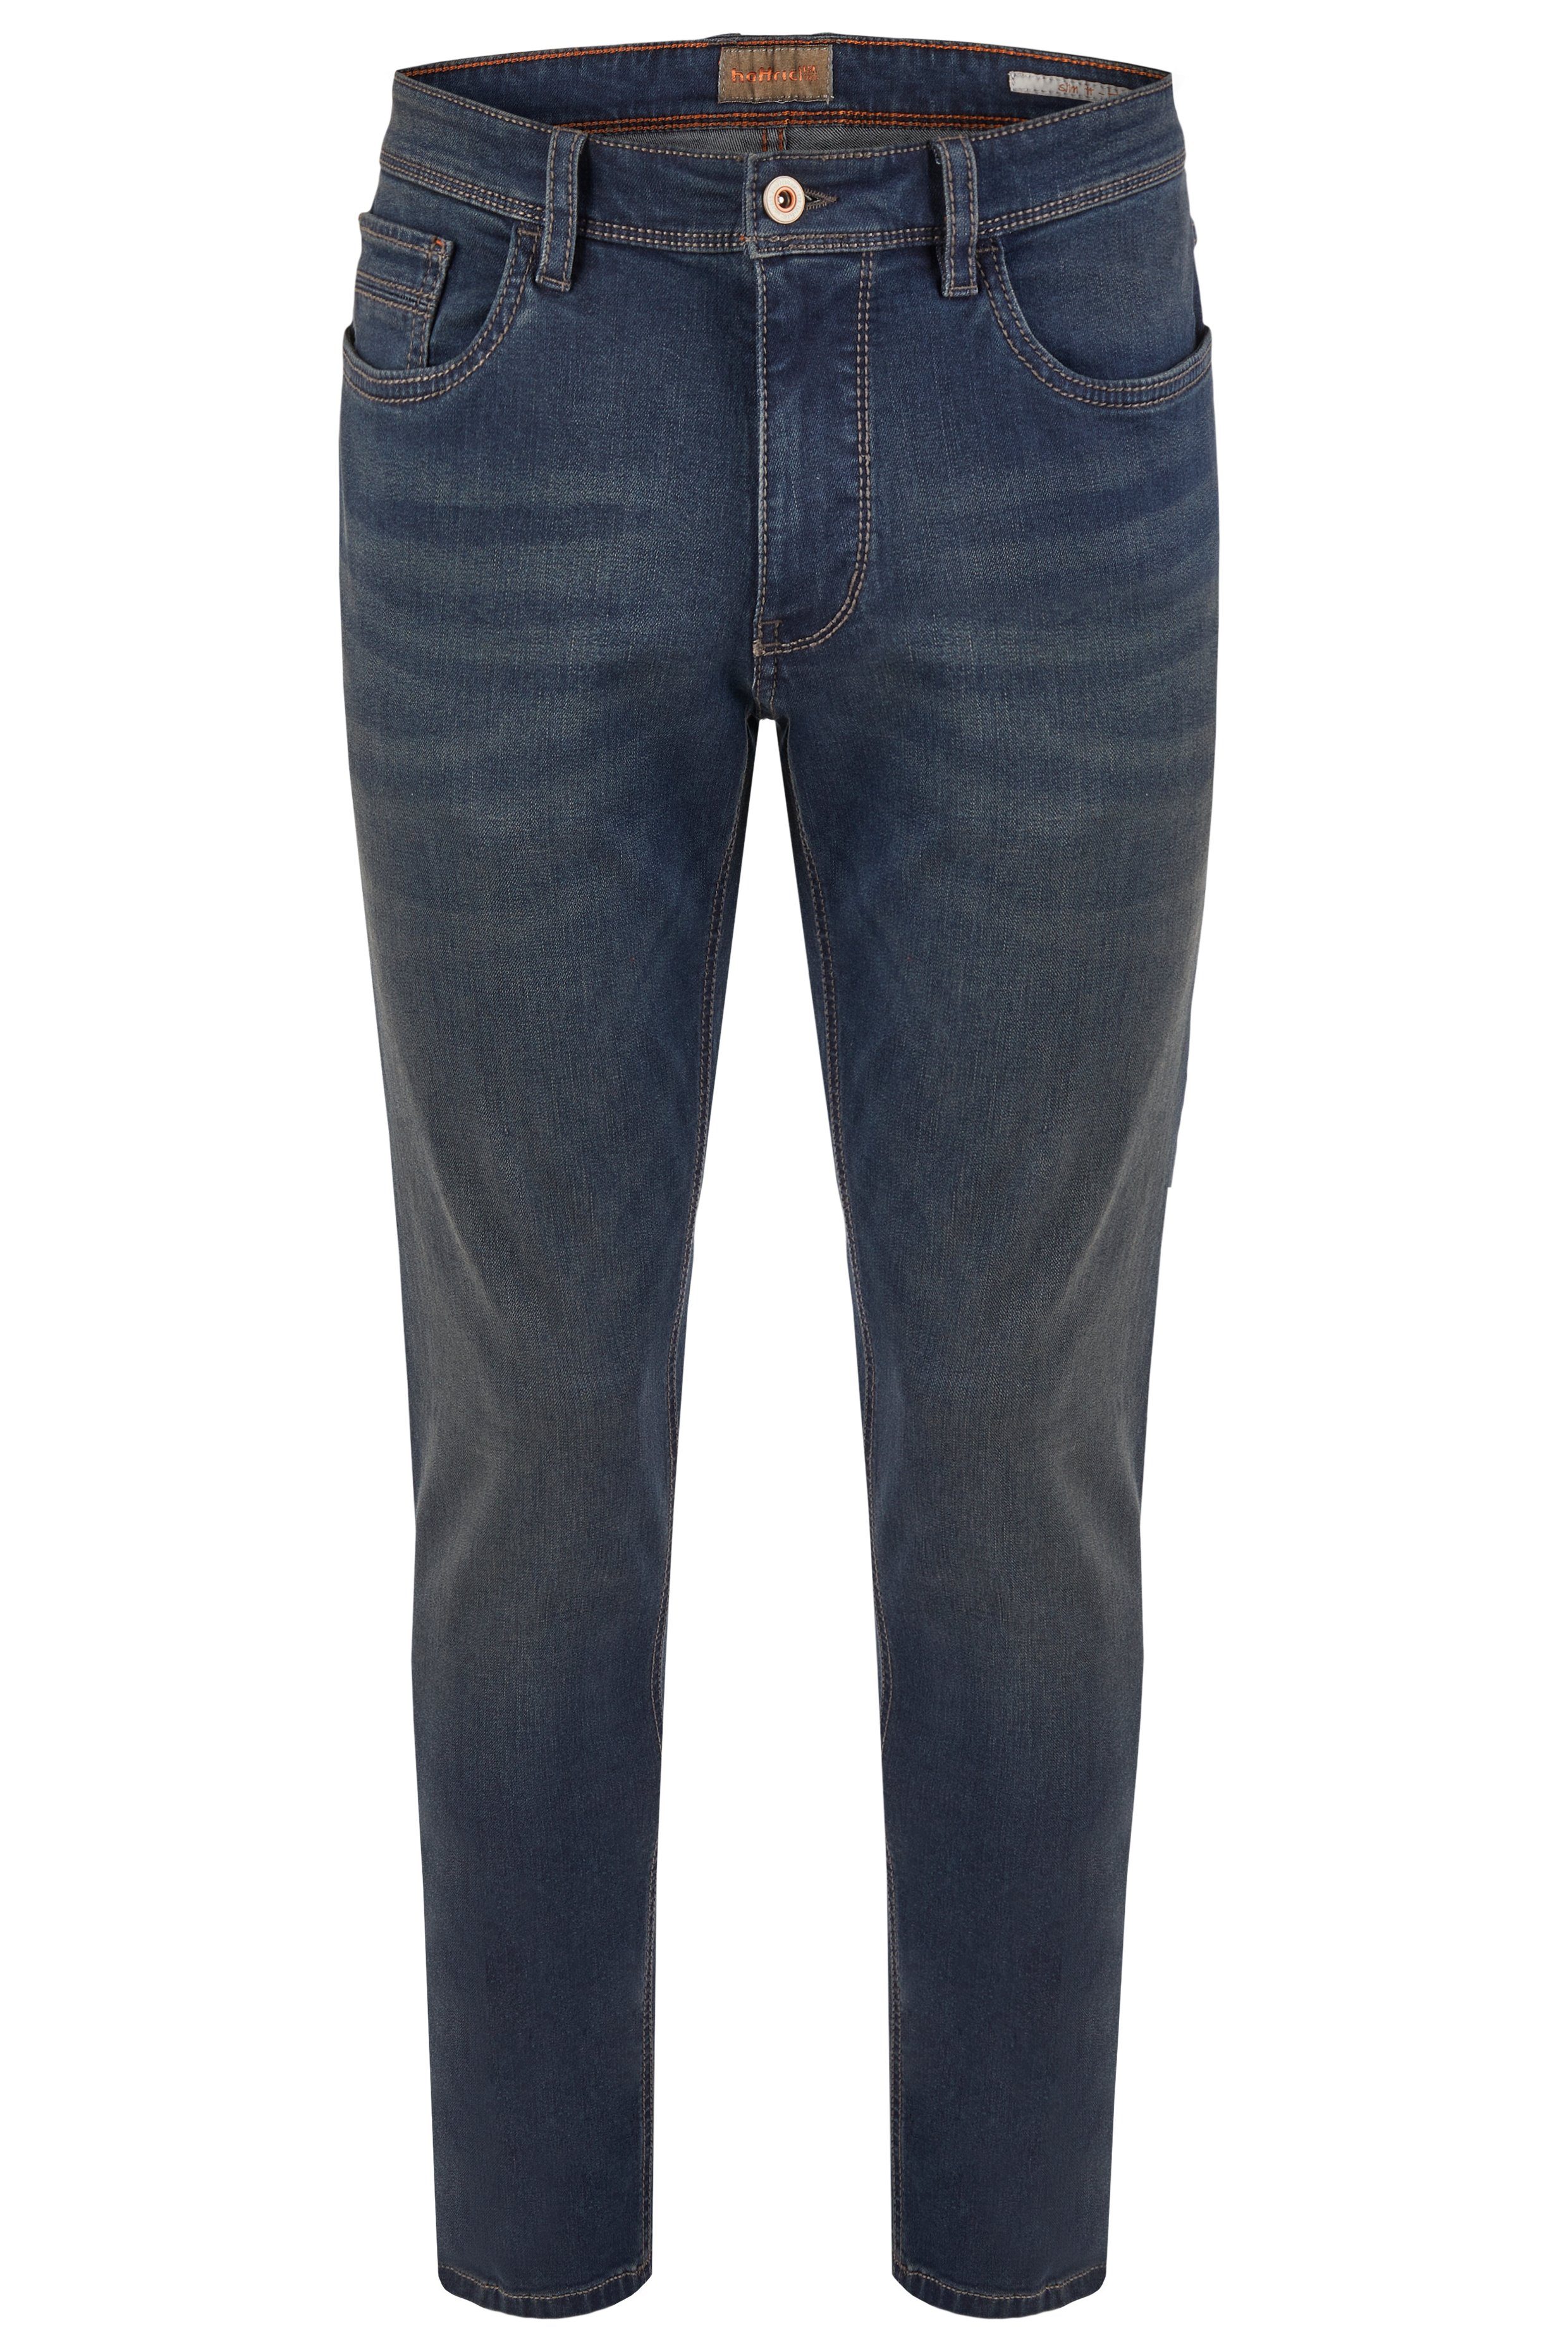 Hattric 5-Pocket-Jeans HATTRIC blue 688745 dark 6348.46 HARRIS